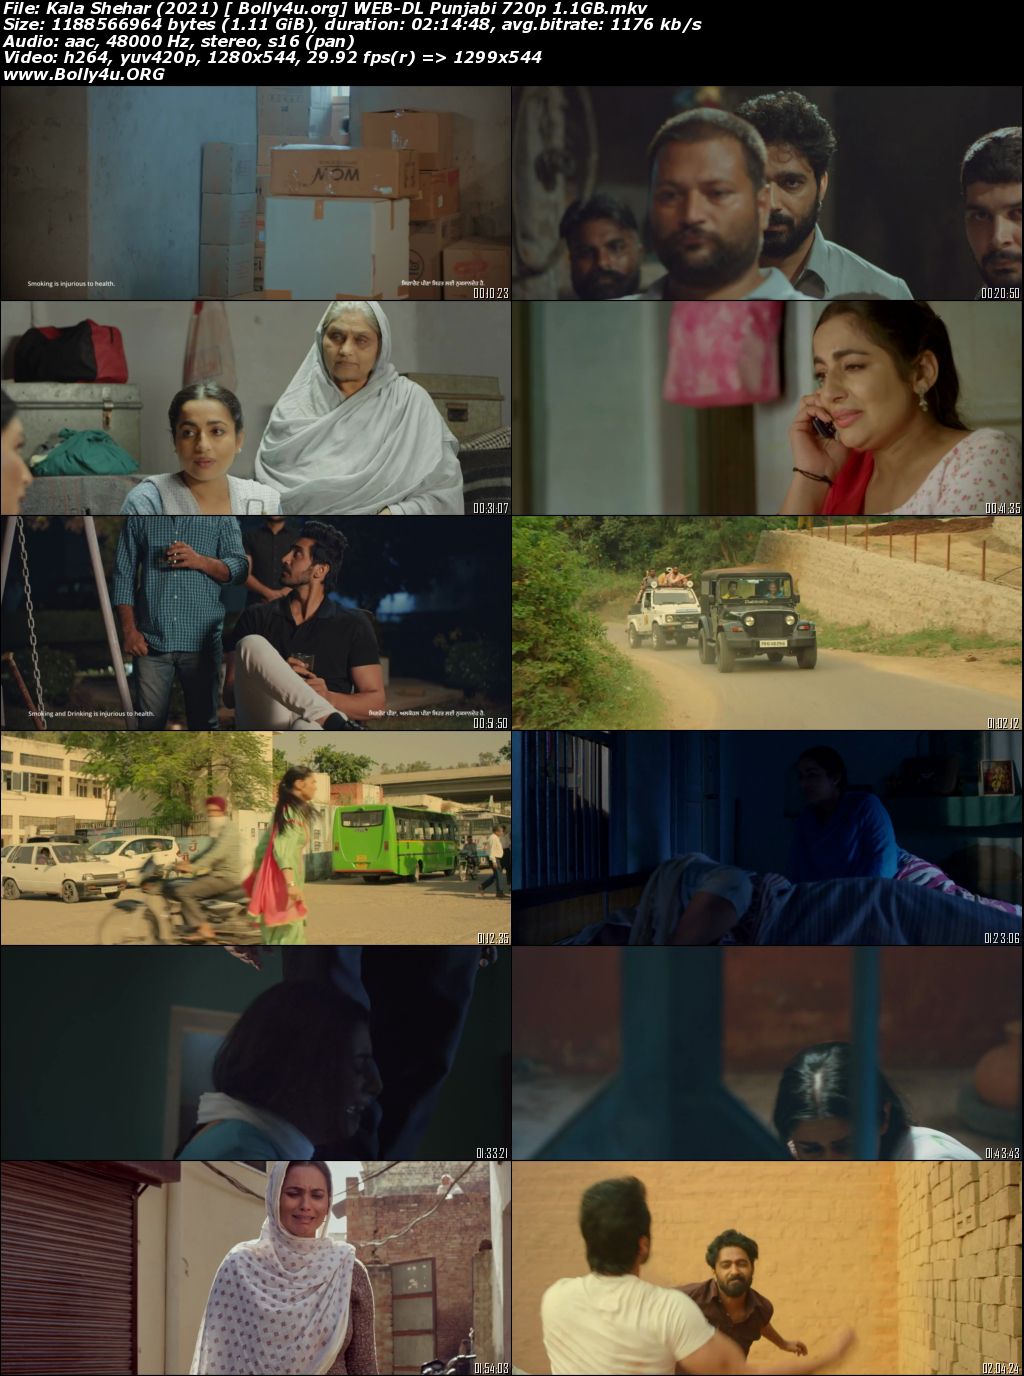 Kala Shehar 2021 WEB-DL 1.1GB Punjabi Movie Download 720p